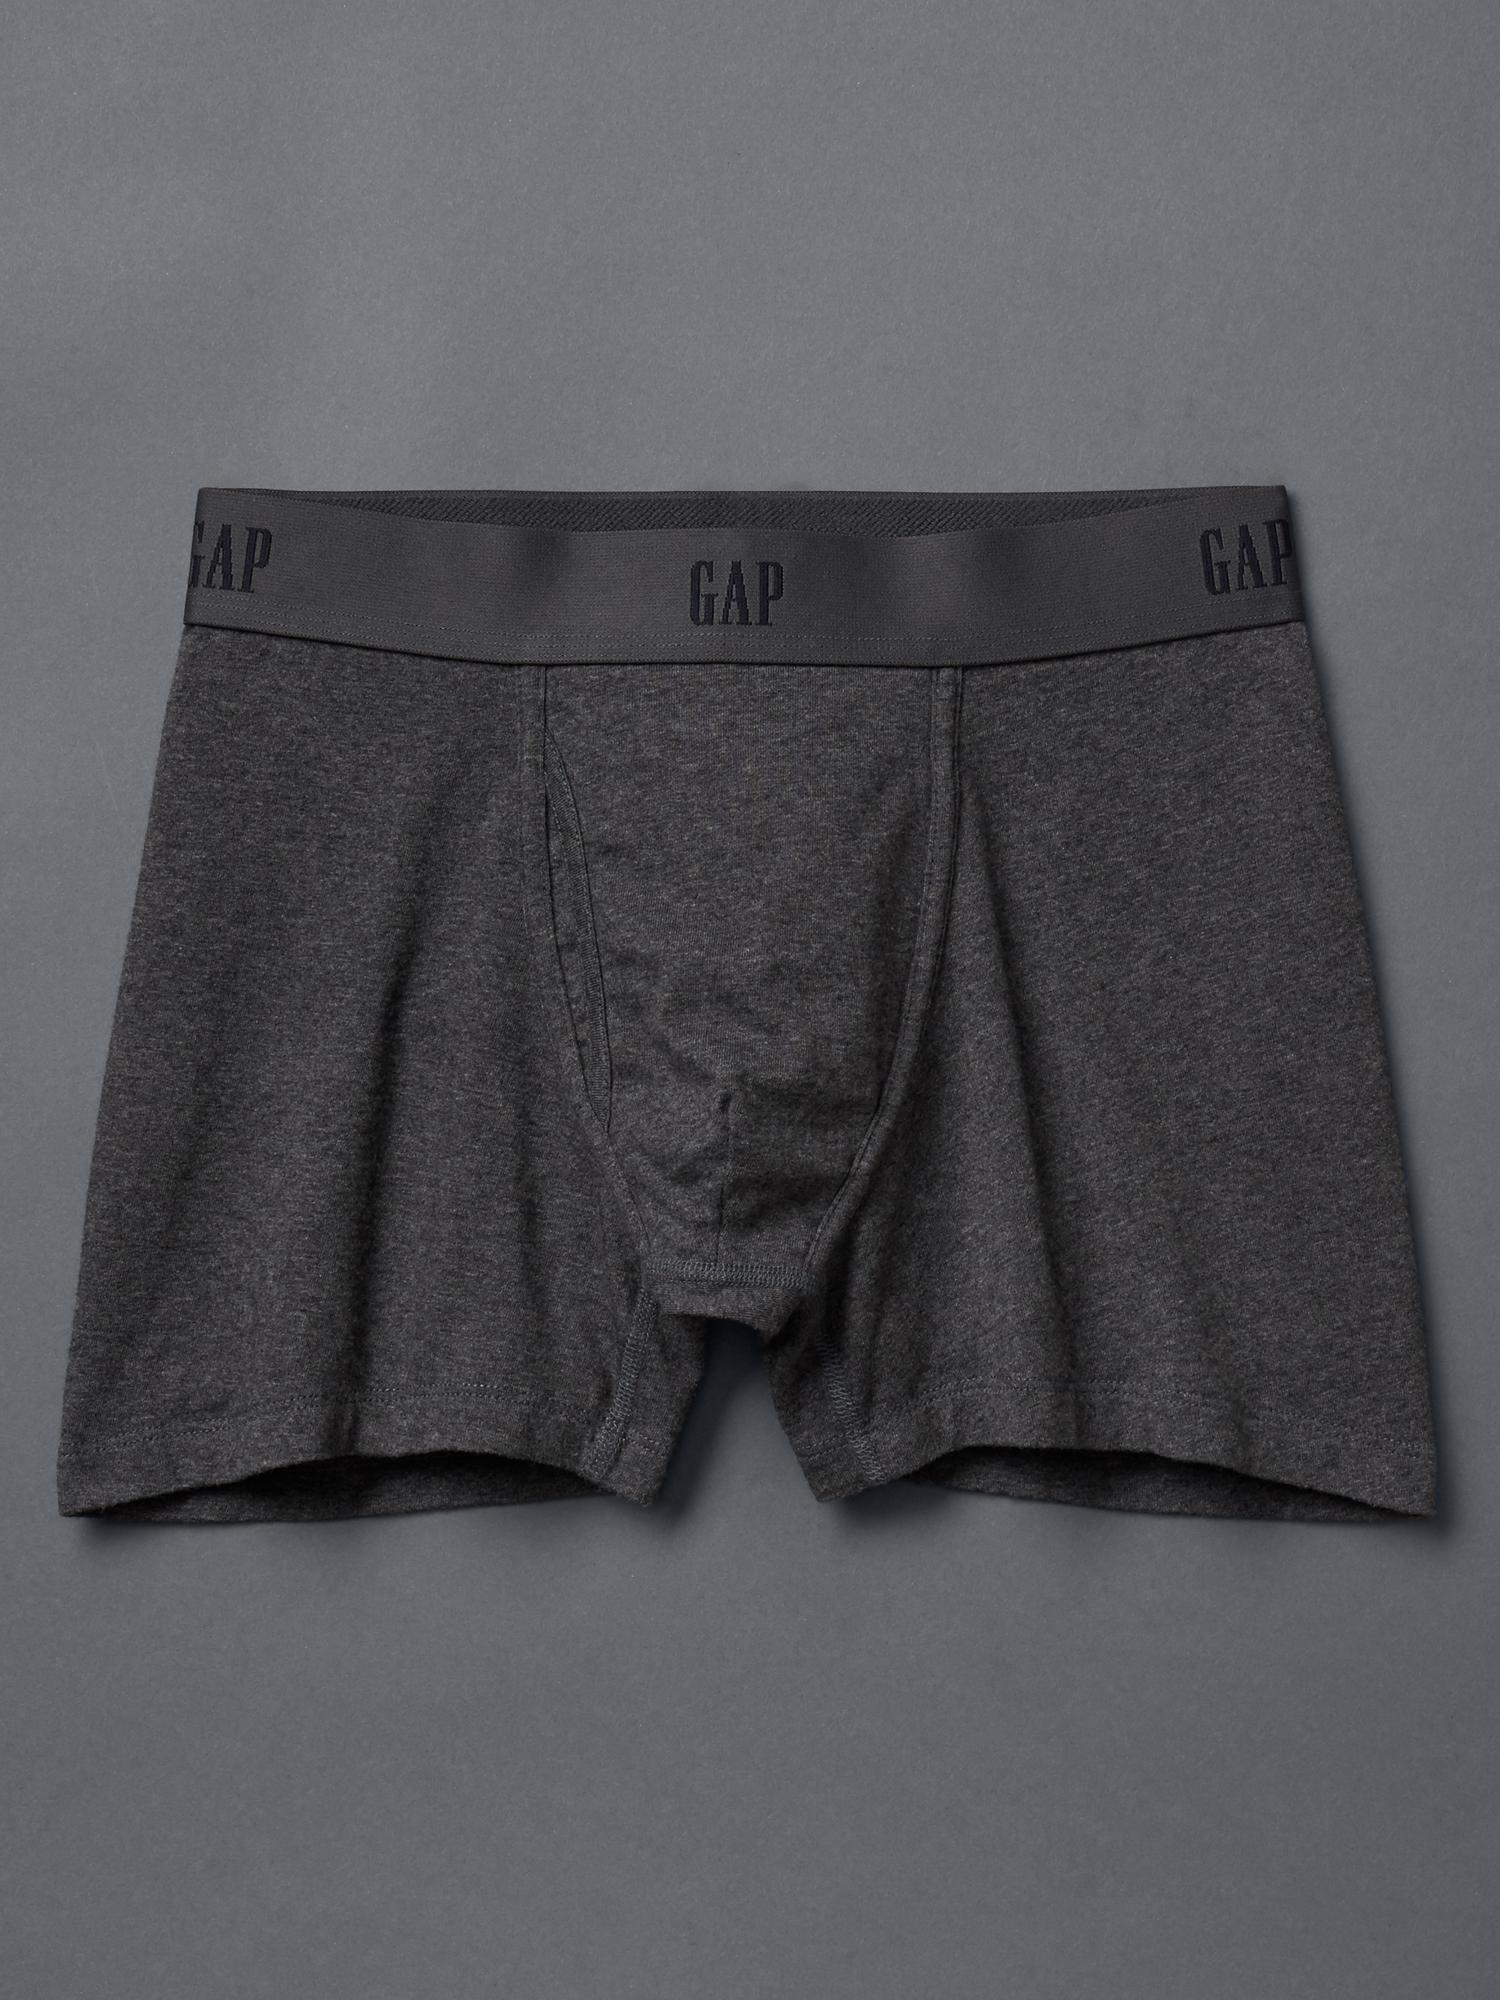 Gap Logo Boxer Briefs (3-Pack)